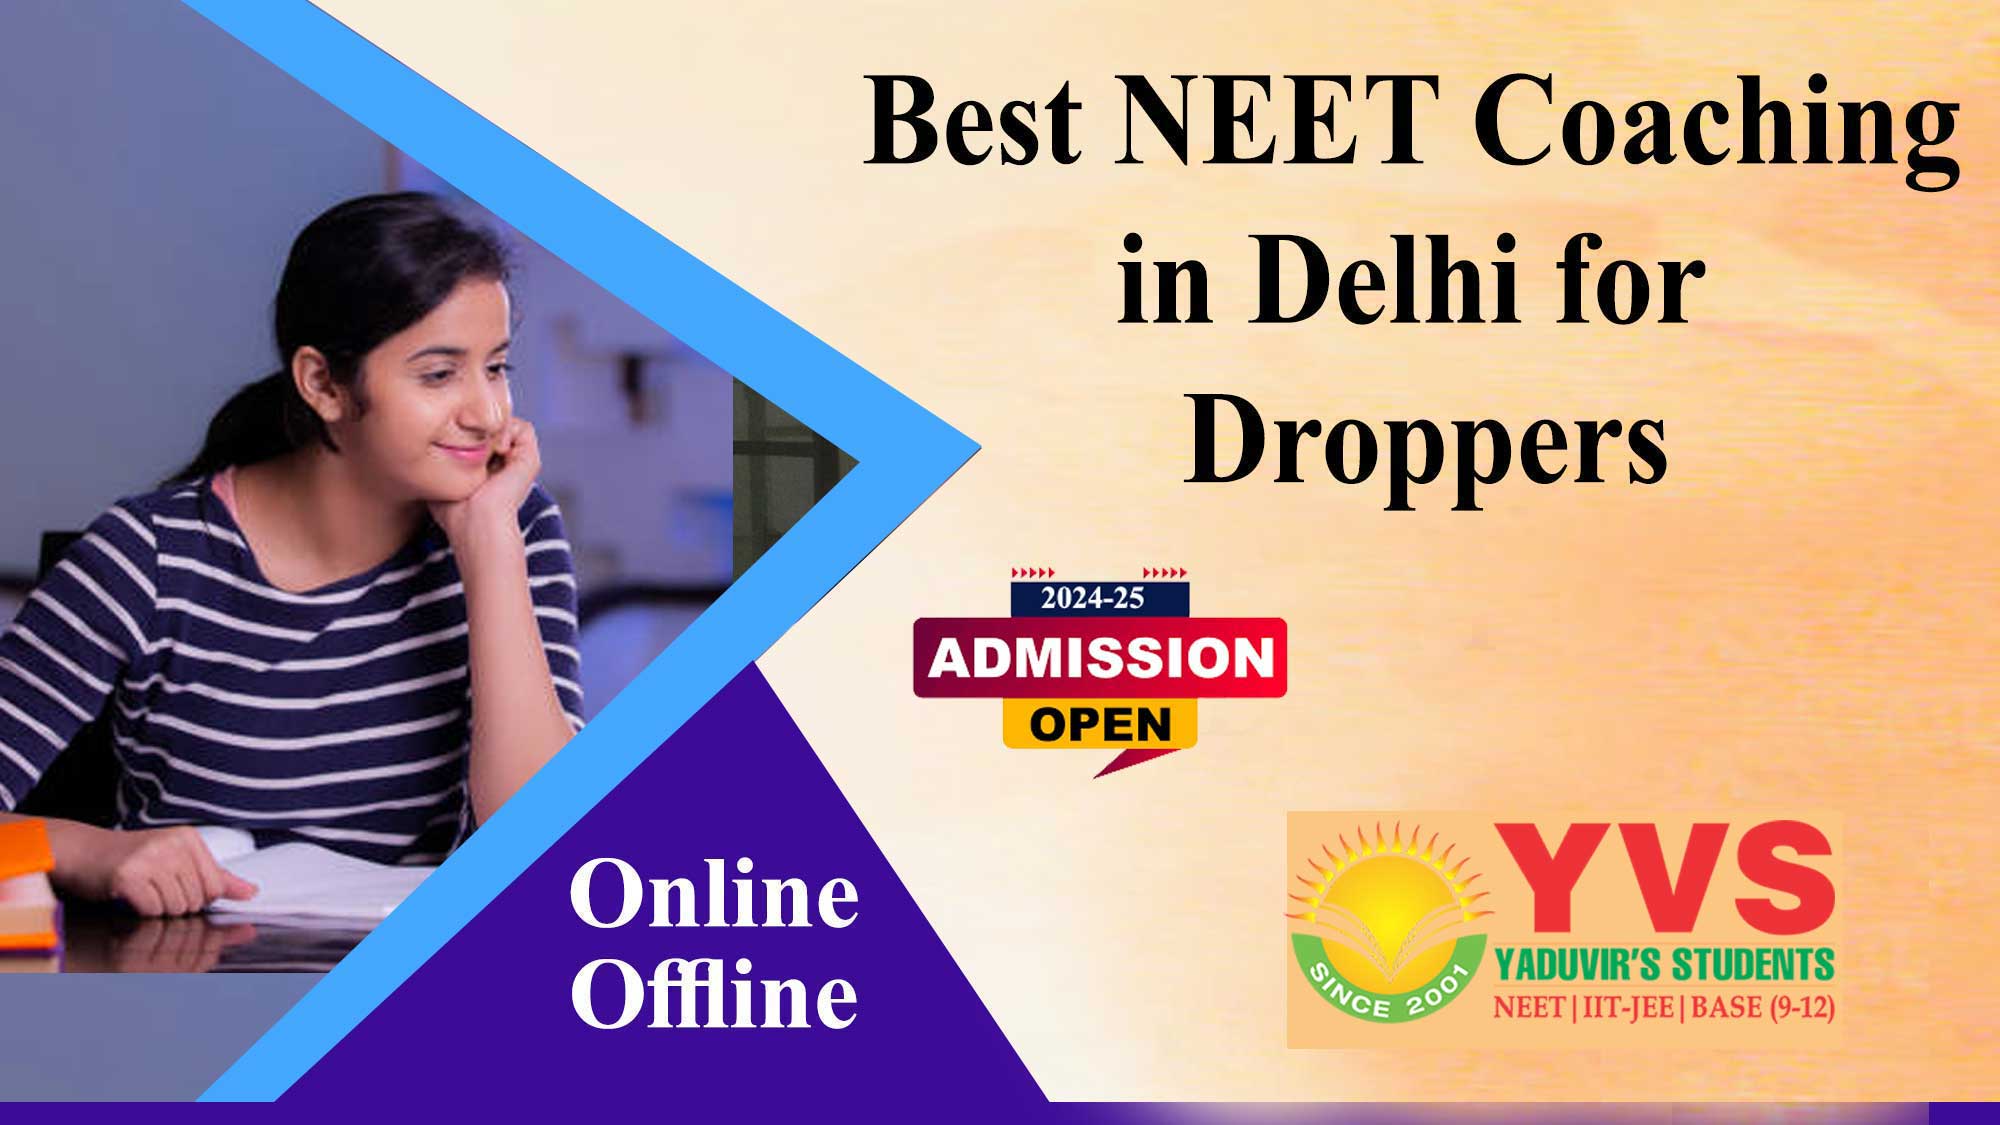 Best NEET Coaching in Delhi for Droppers